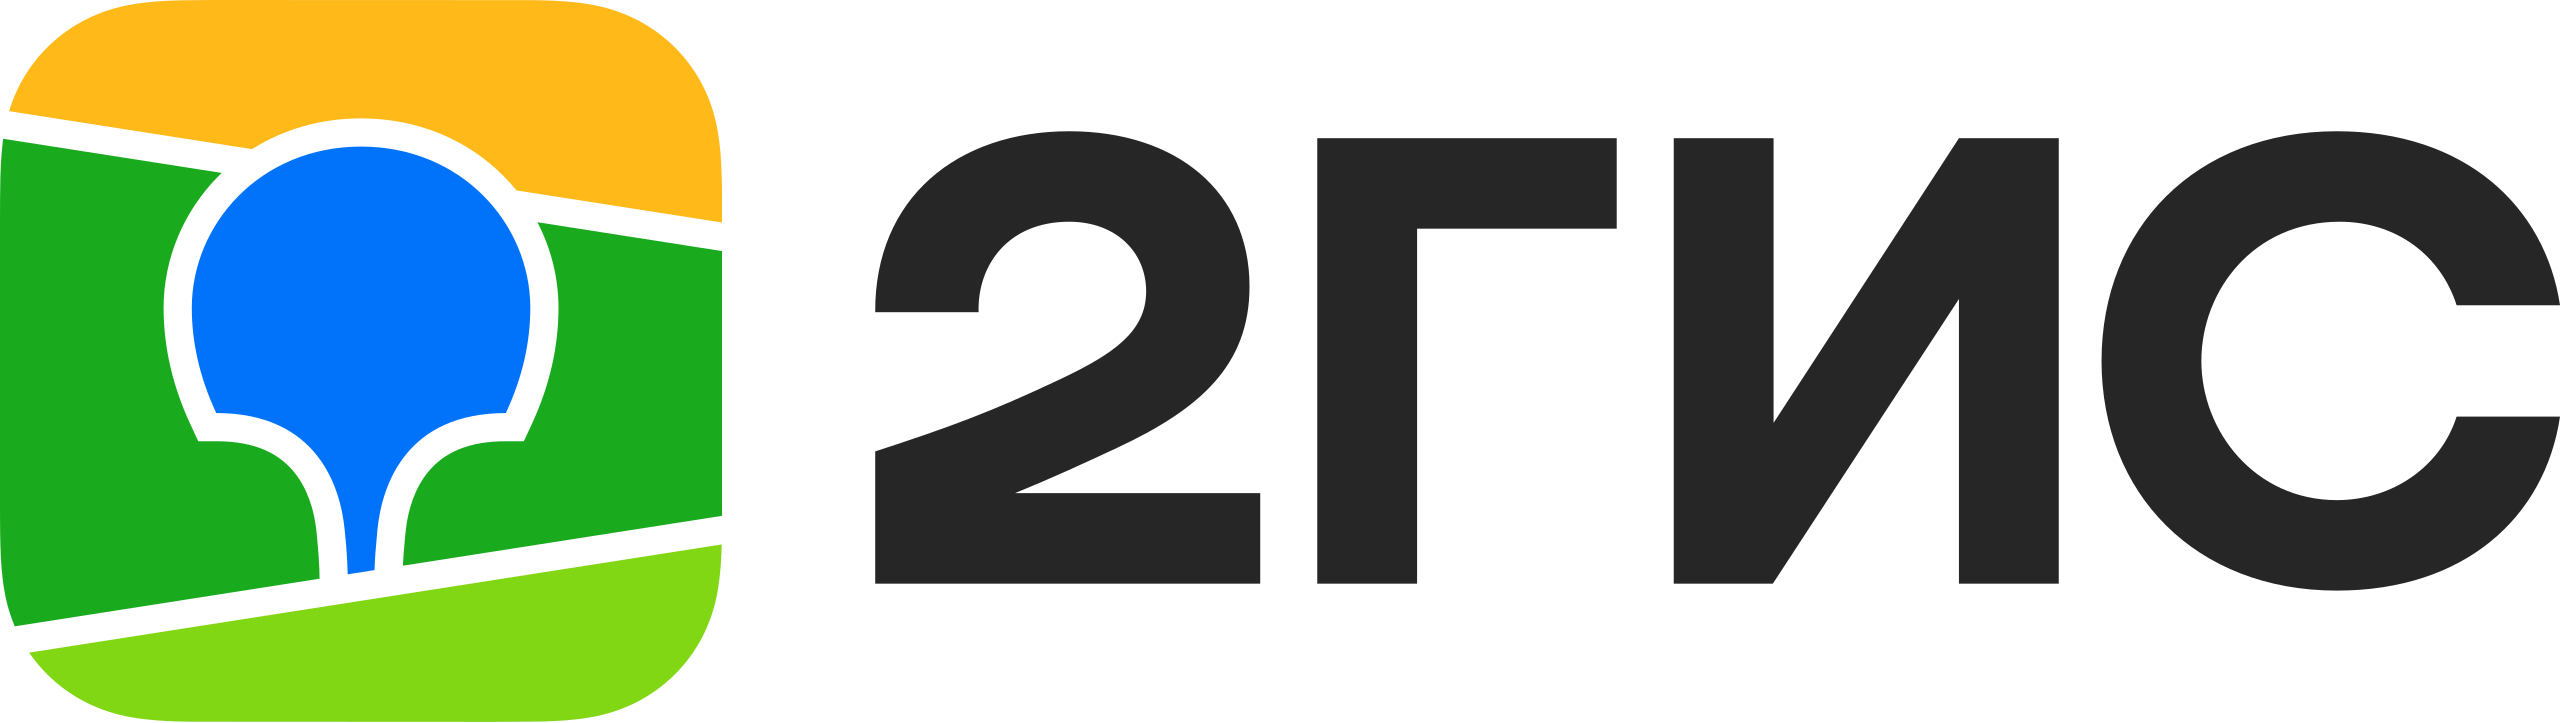 Bigpicture ru логотип 2гис